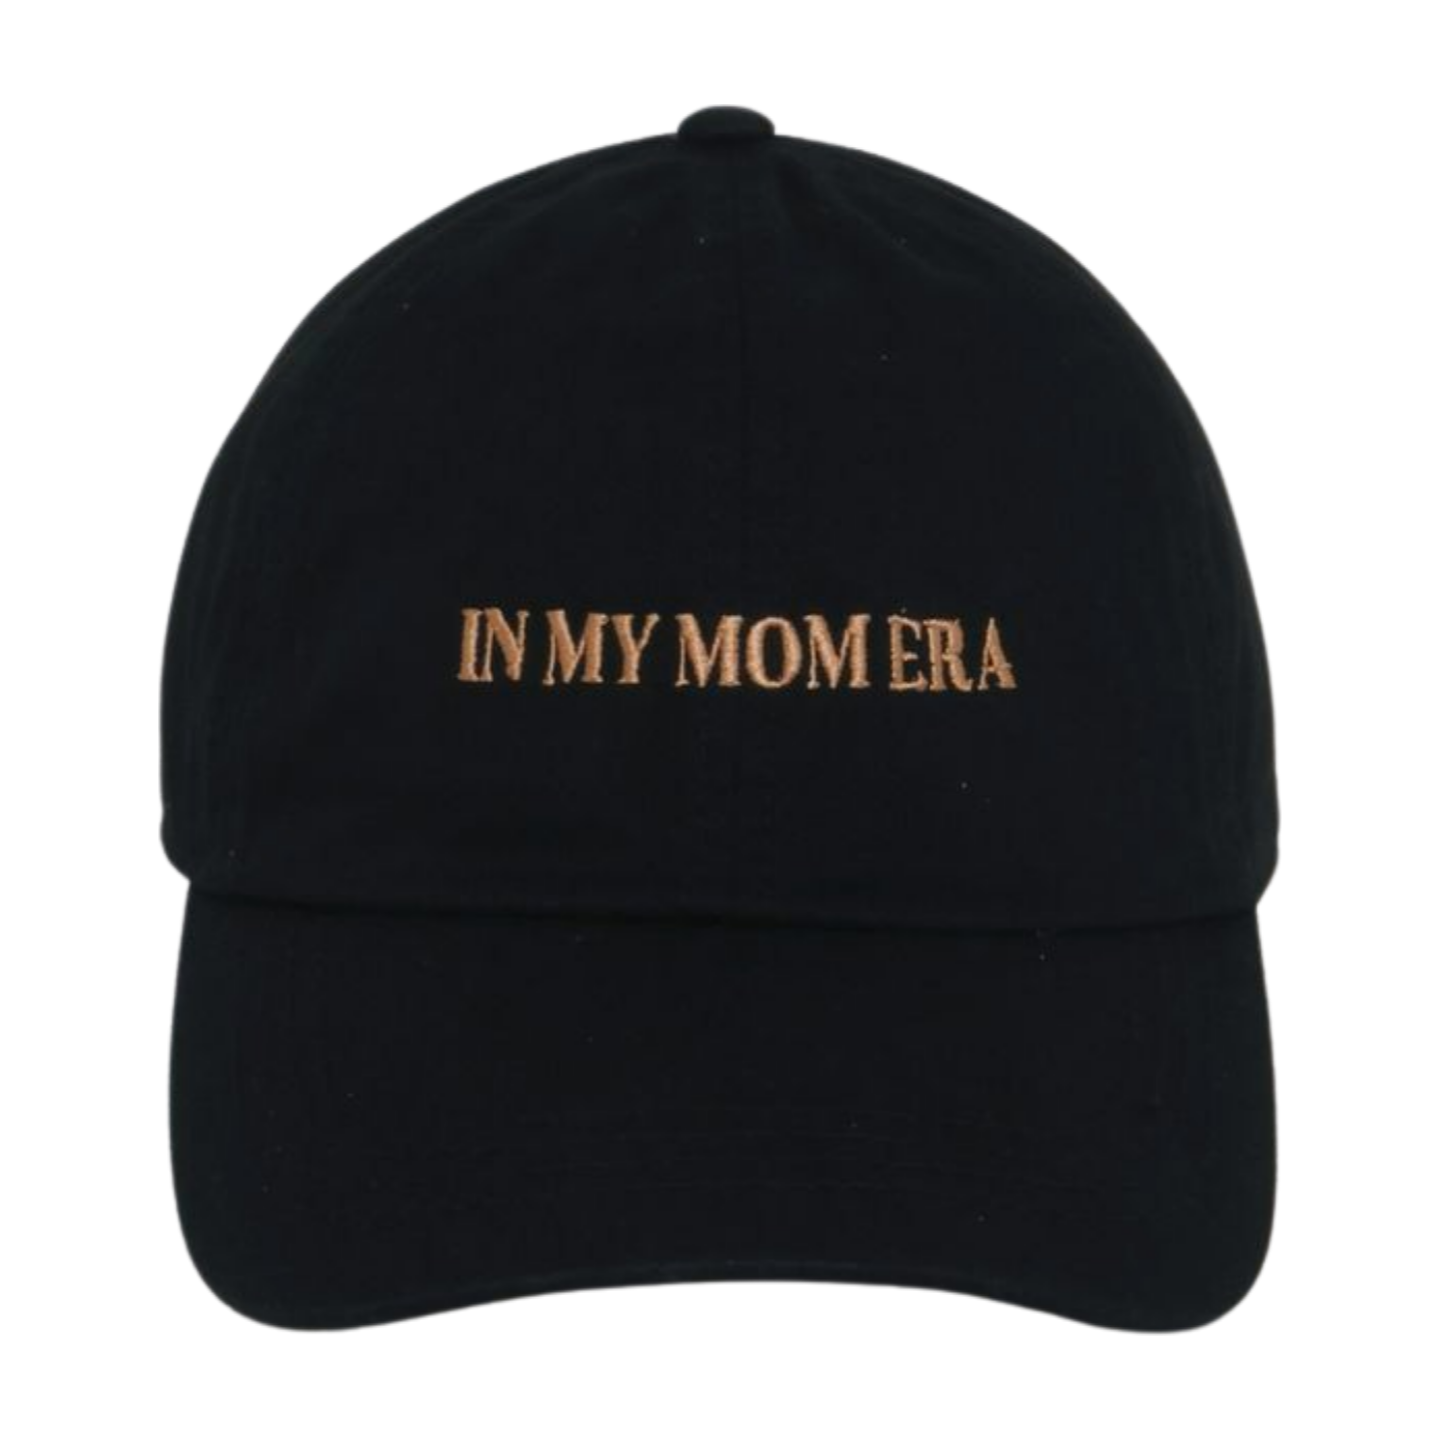 "IN MY MOM ERA" EMBROIDERED BASEBALL CAP: Black